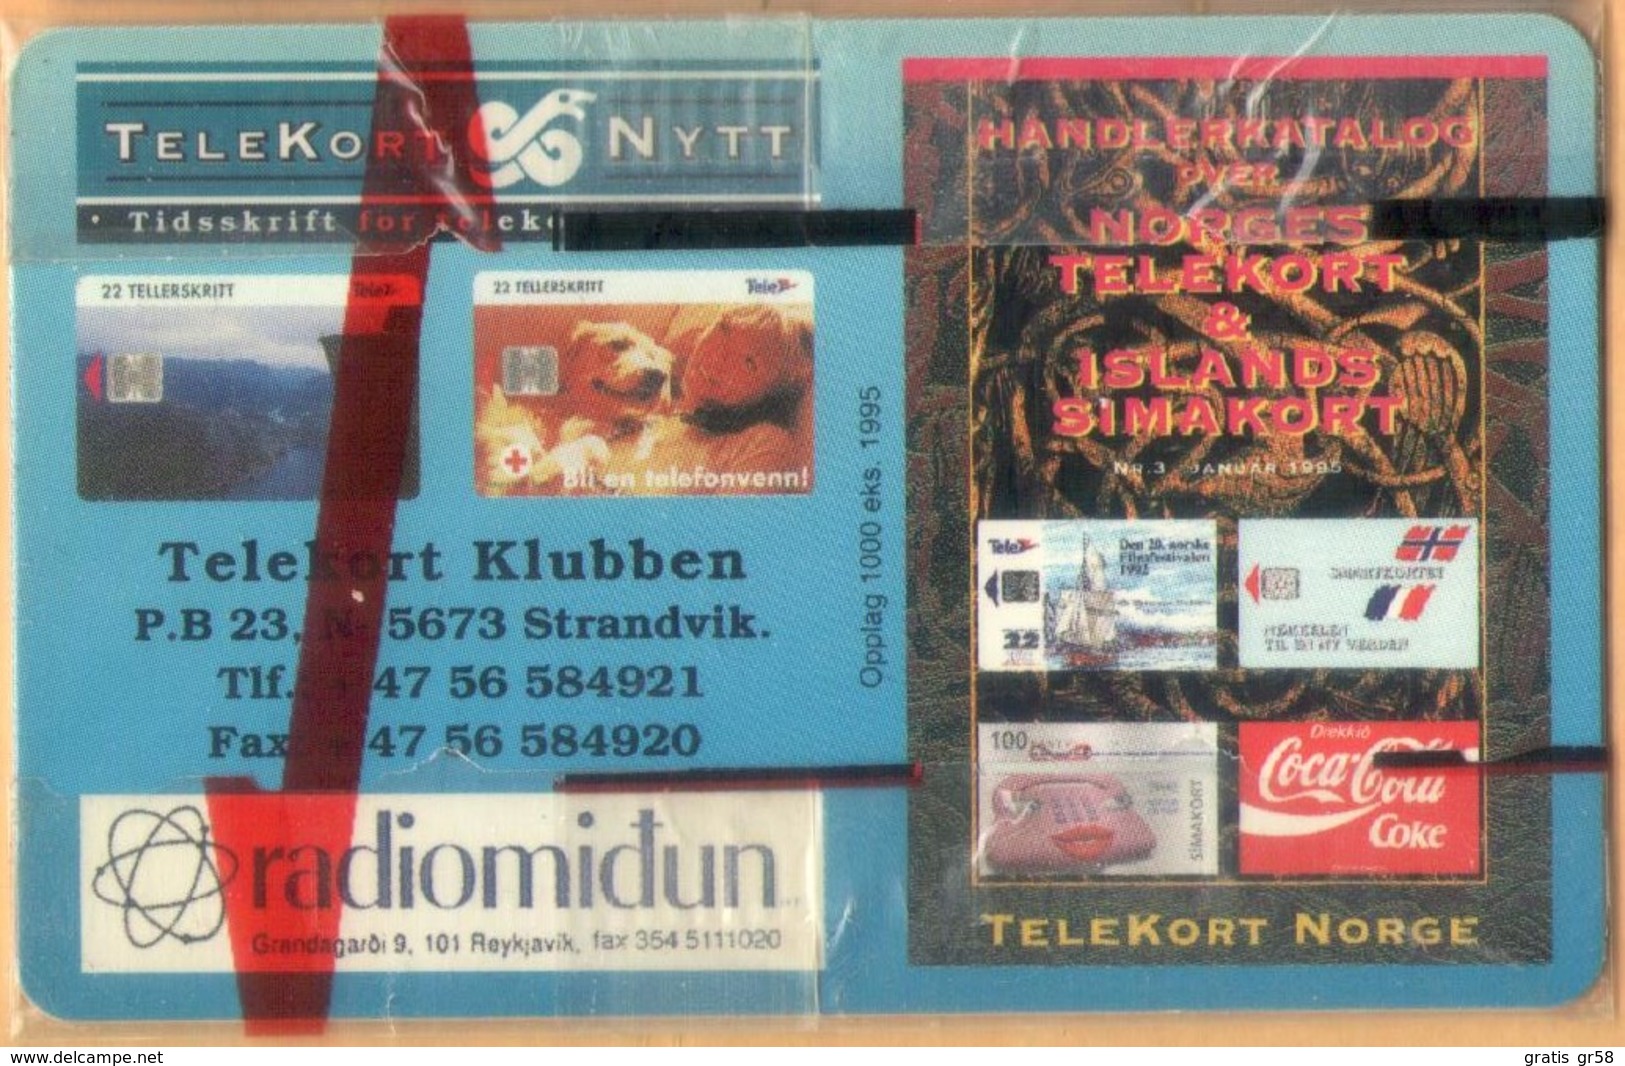 Iceland - ICE-P-1, Radomidun, TeleKort Norge - Astronaut, Coca Cola, 100U, 1,000ex, 1995, Mint NSB - Islandia